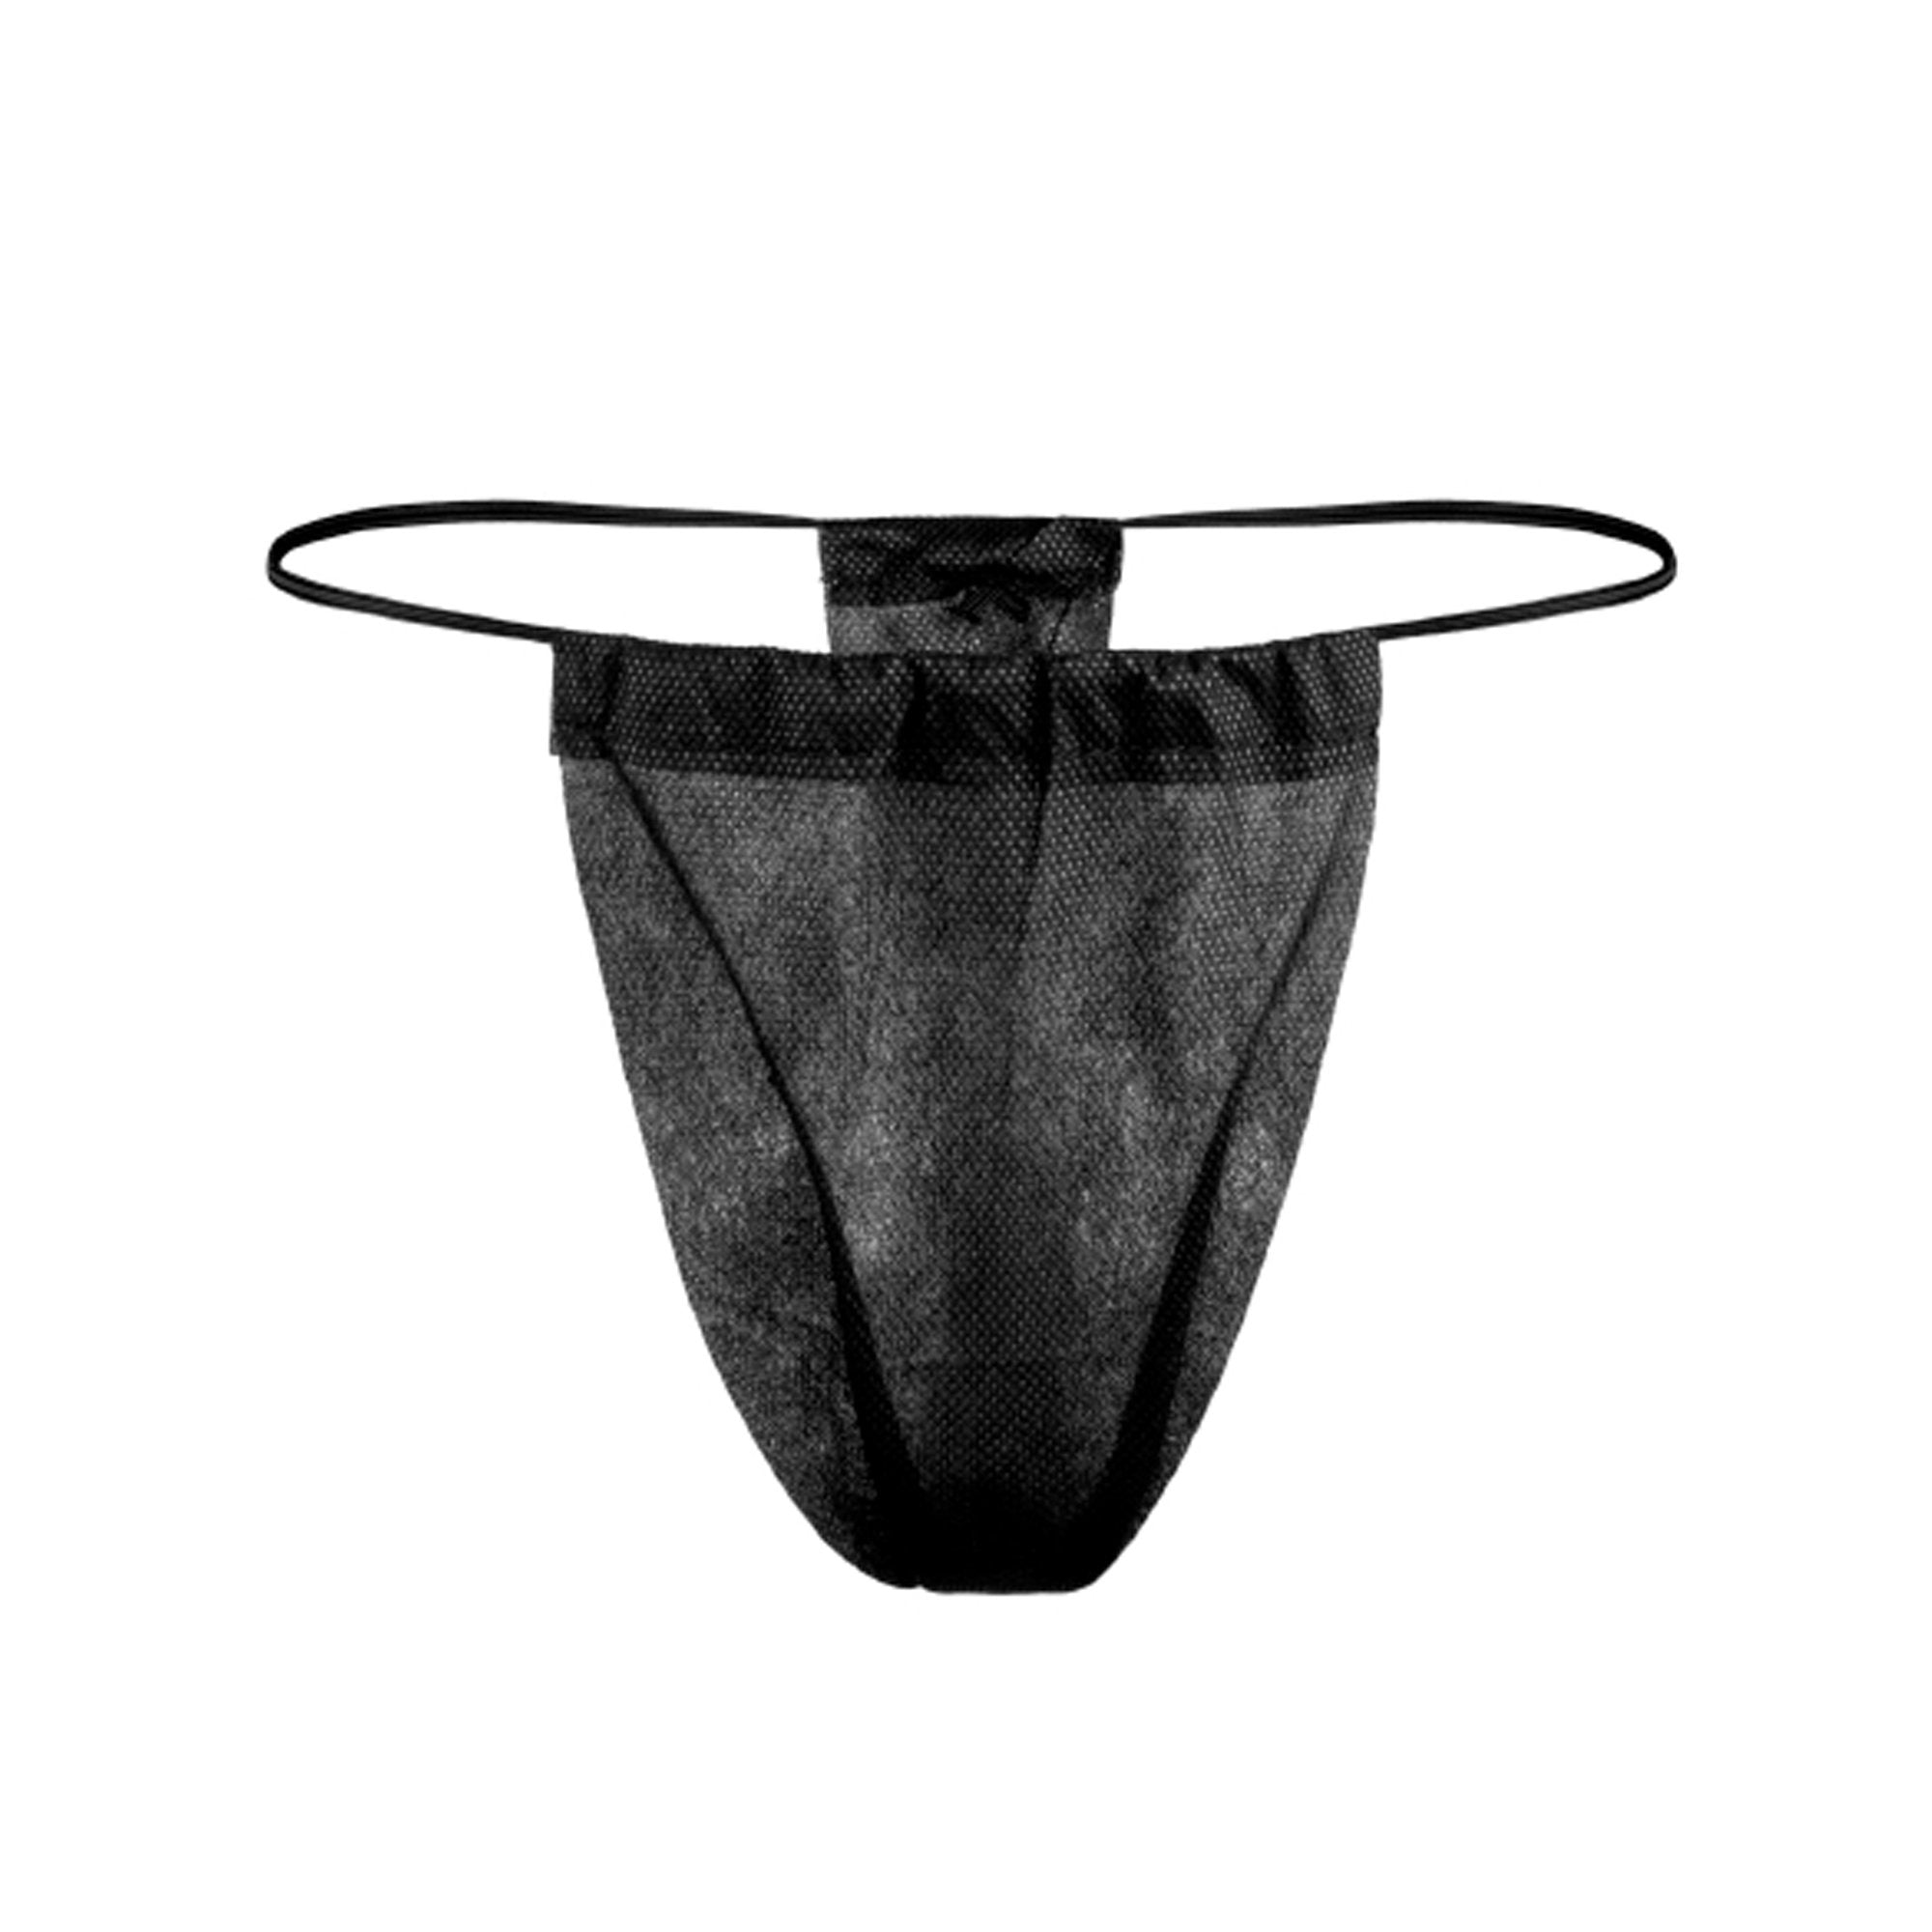 Thong Panty Reflections Black Disposable